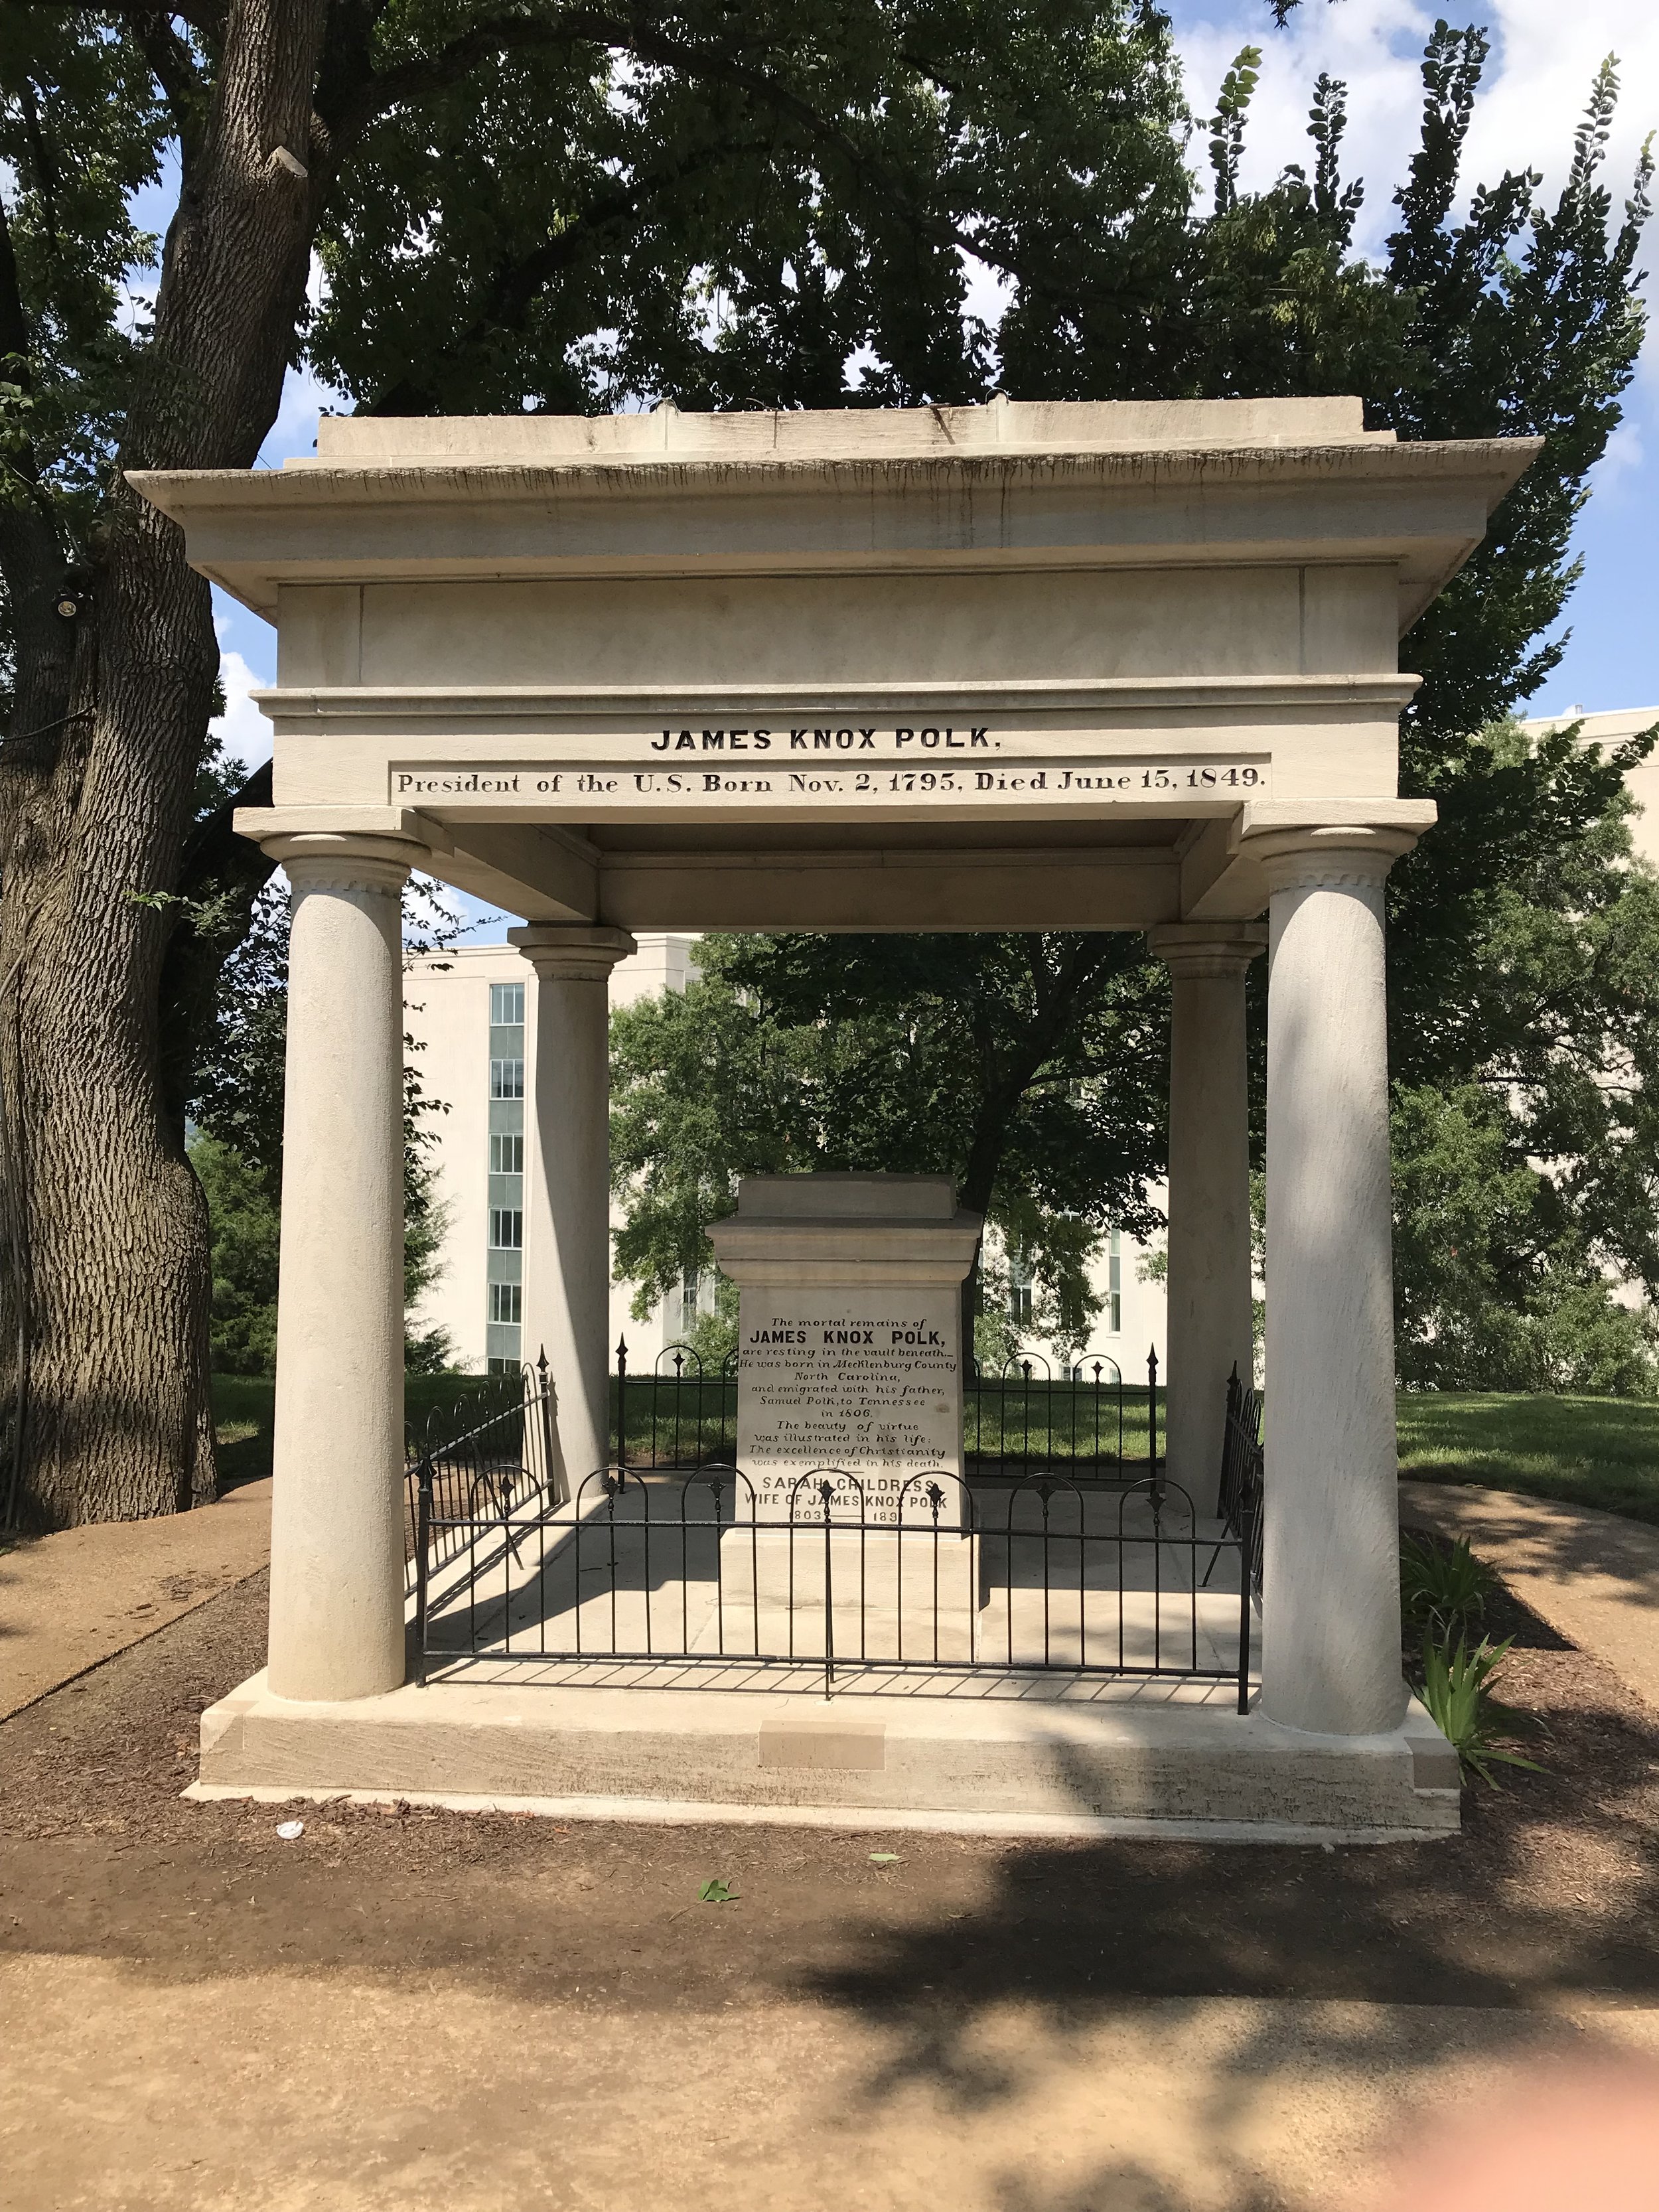 The tomb of James K. Polk